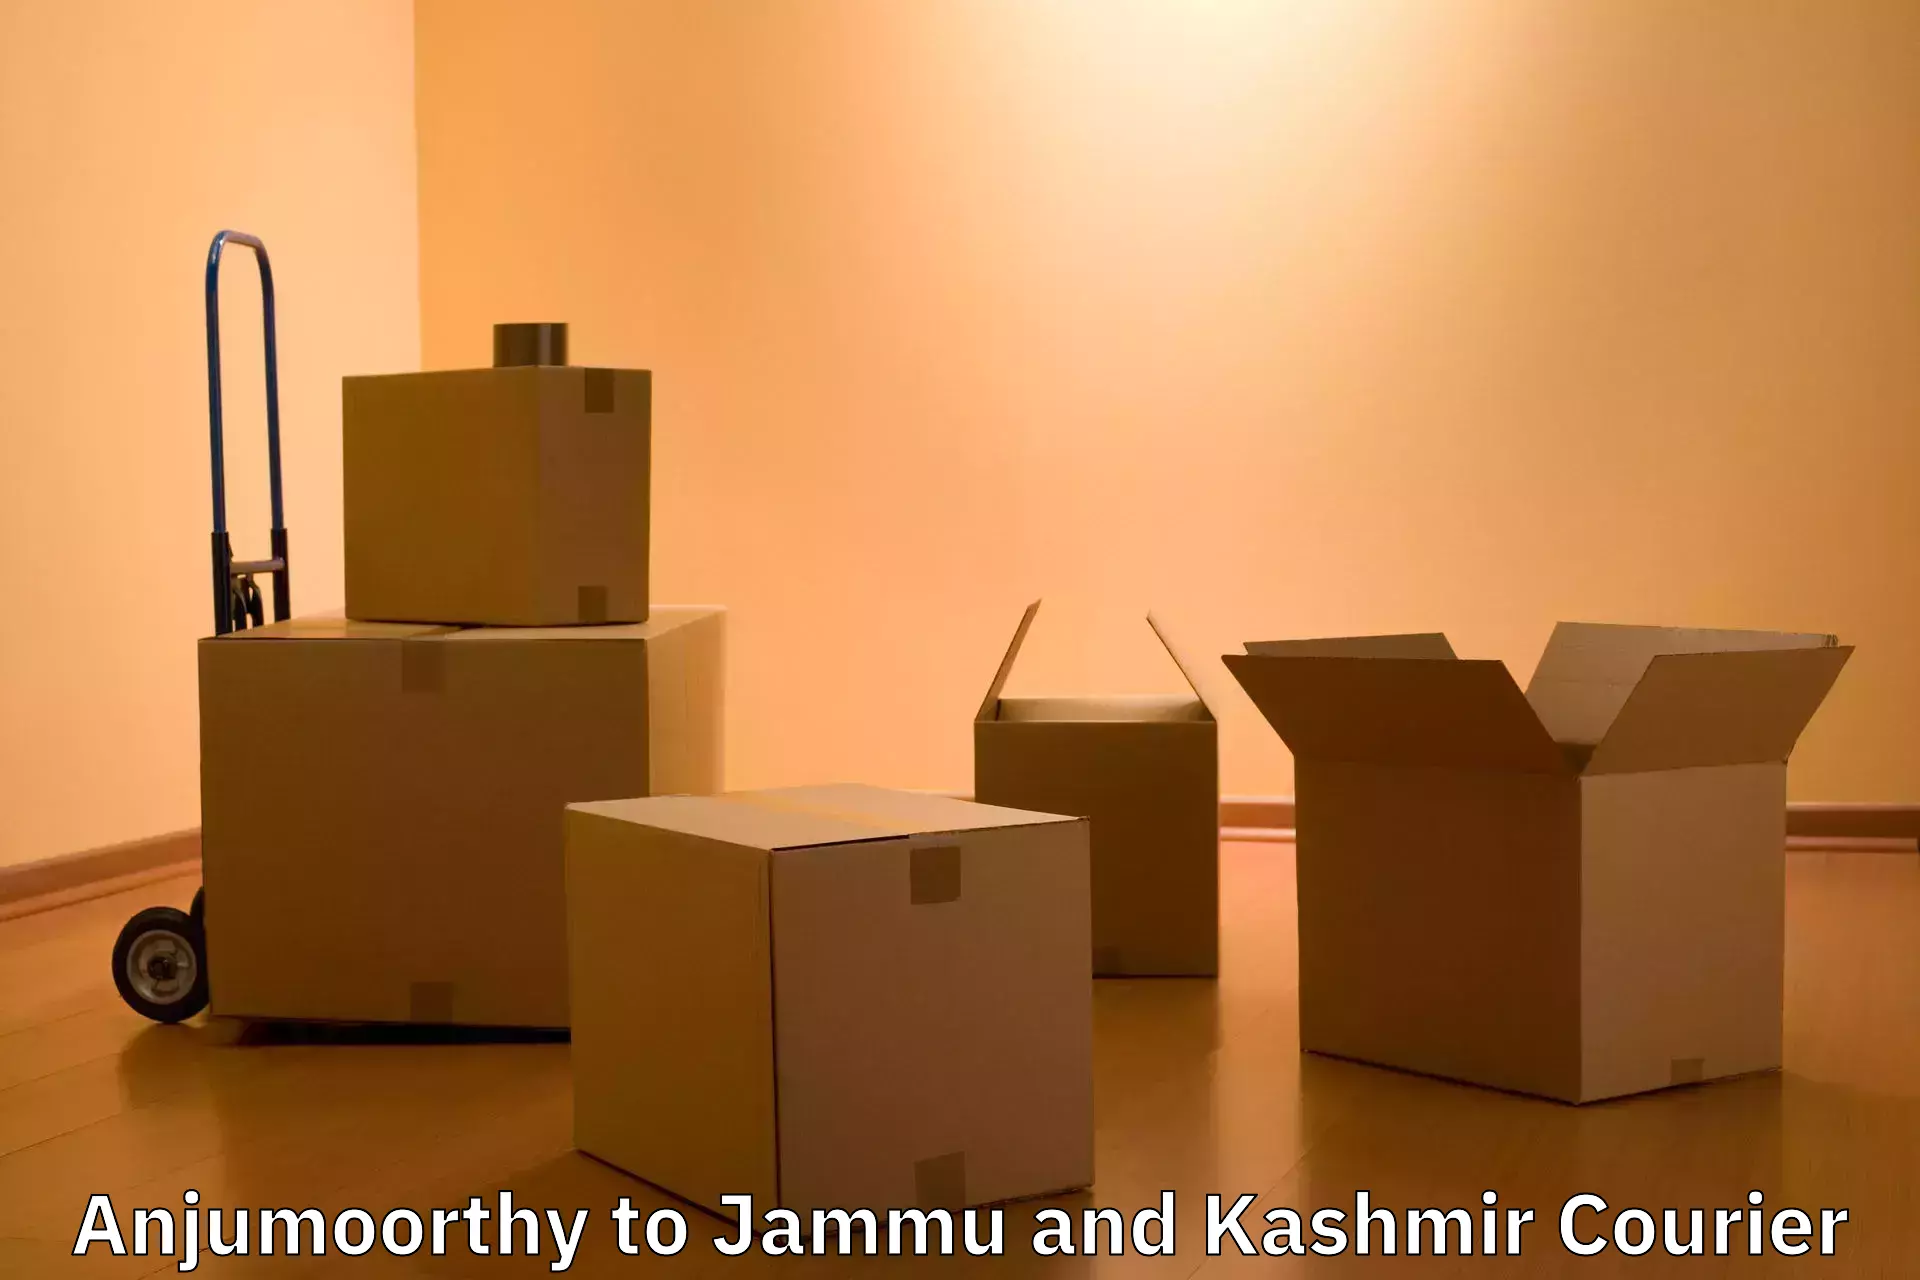 Emergency baggage service Anjumoorthy to University of Jammu